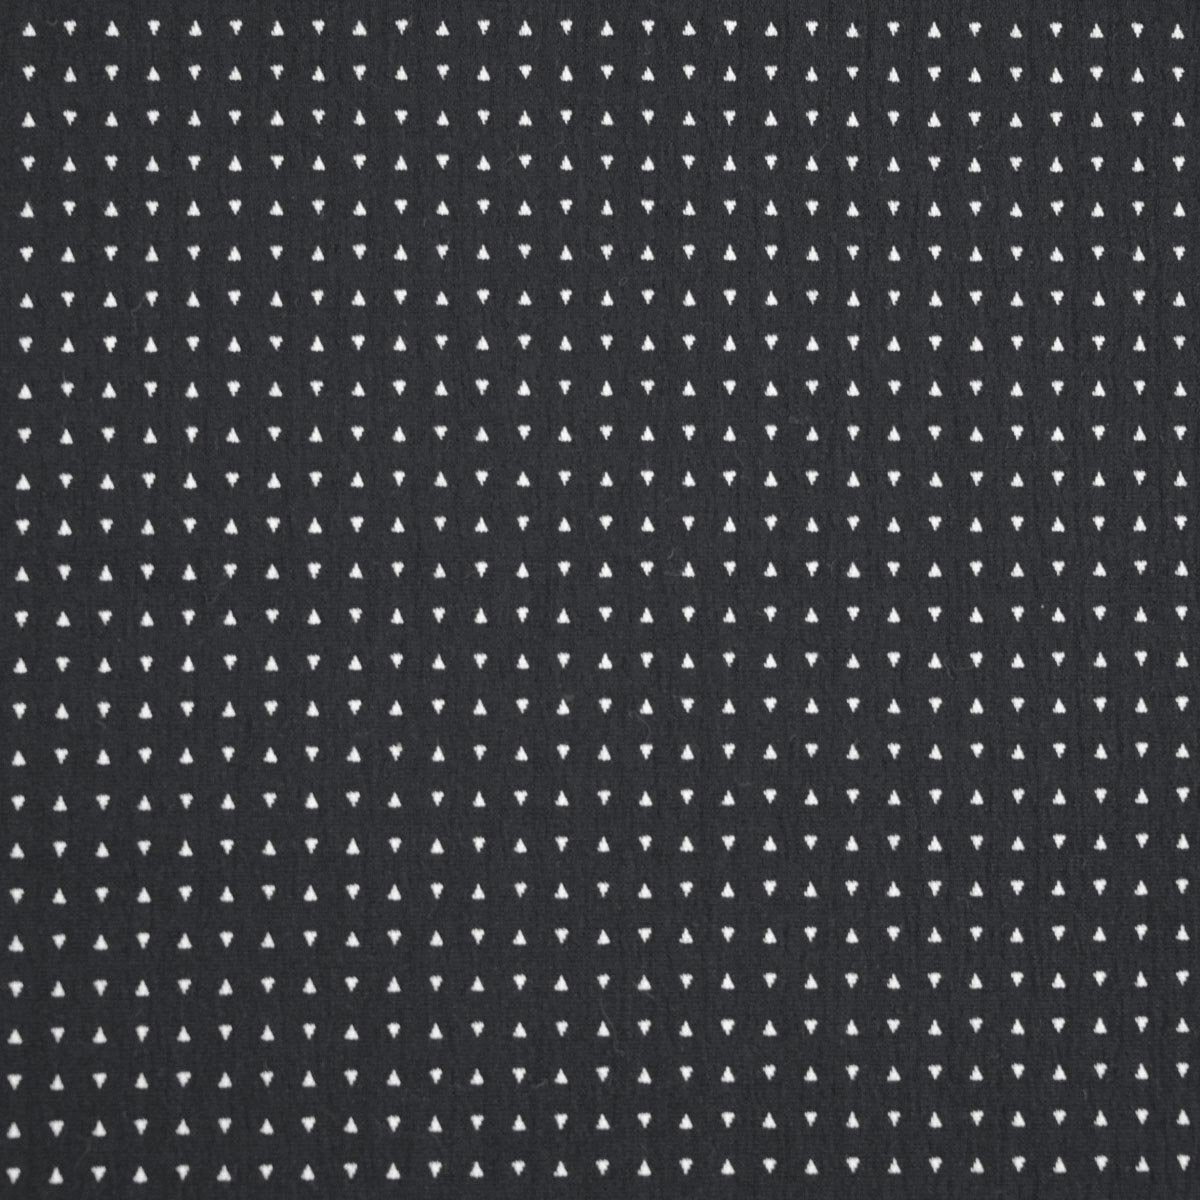 Black Geometric Jacquard Fabric 2162